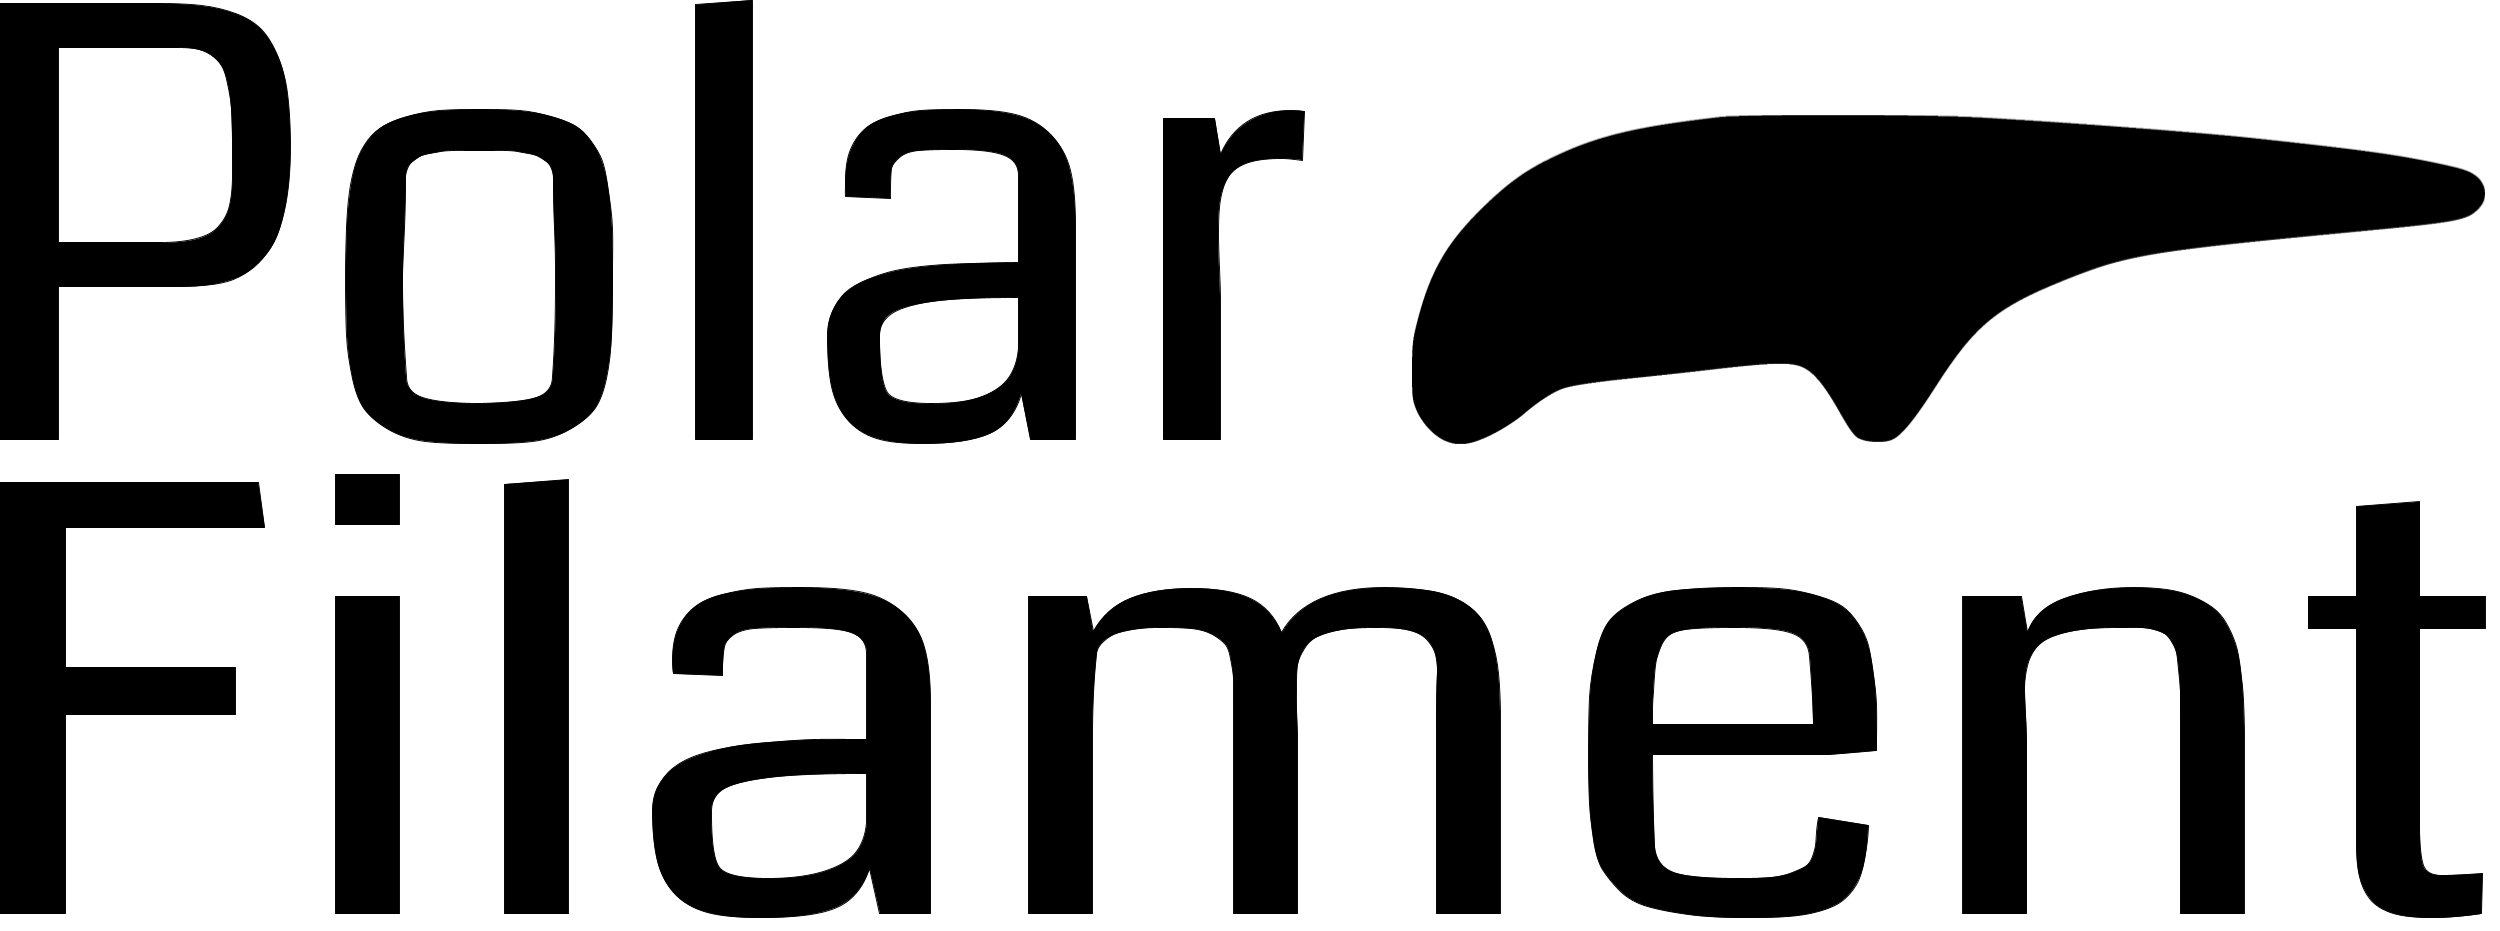 Polar Filament Logo